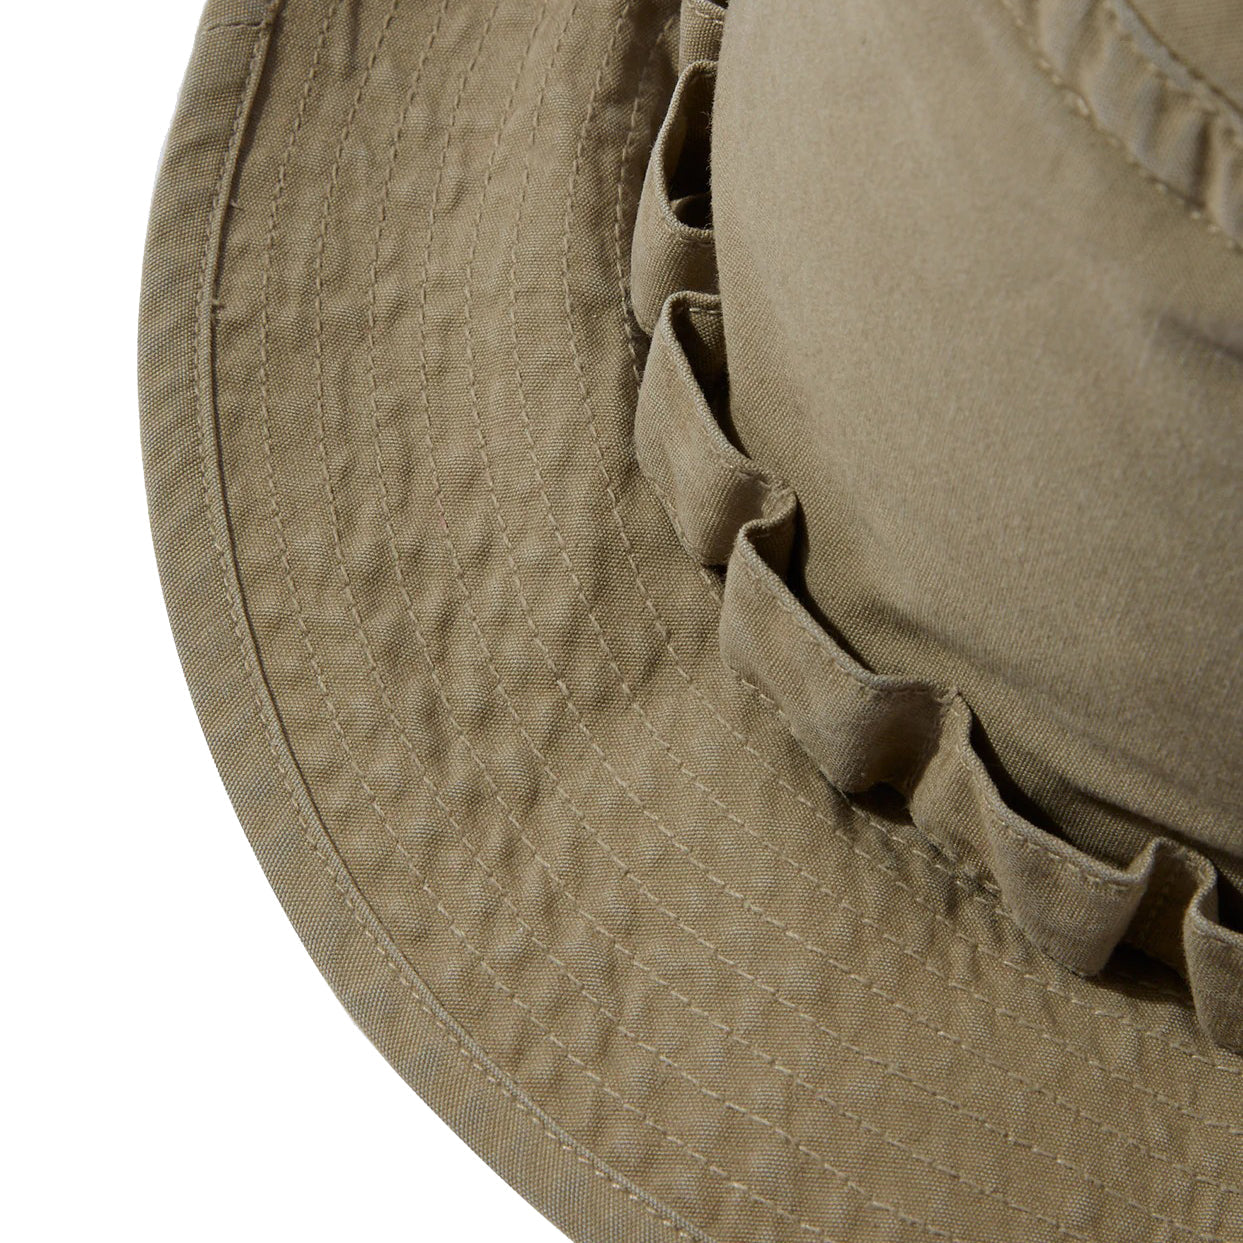 Maharishi High Boonie Hat Sand - HEADWEAR - Canada